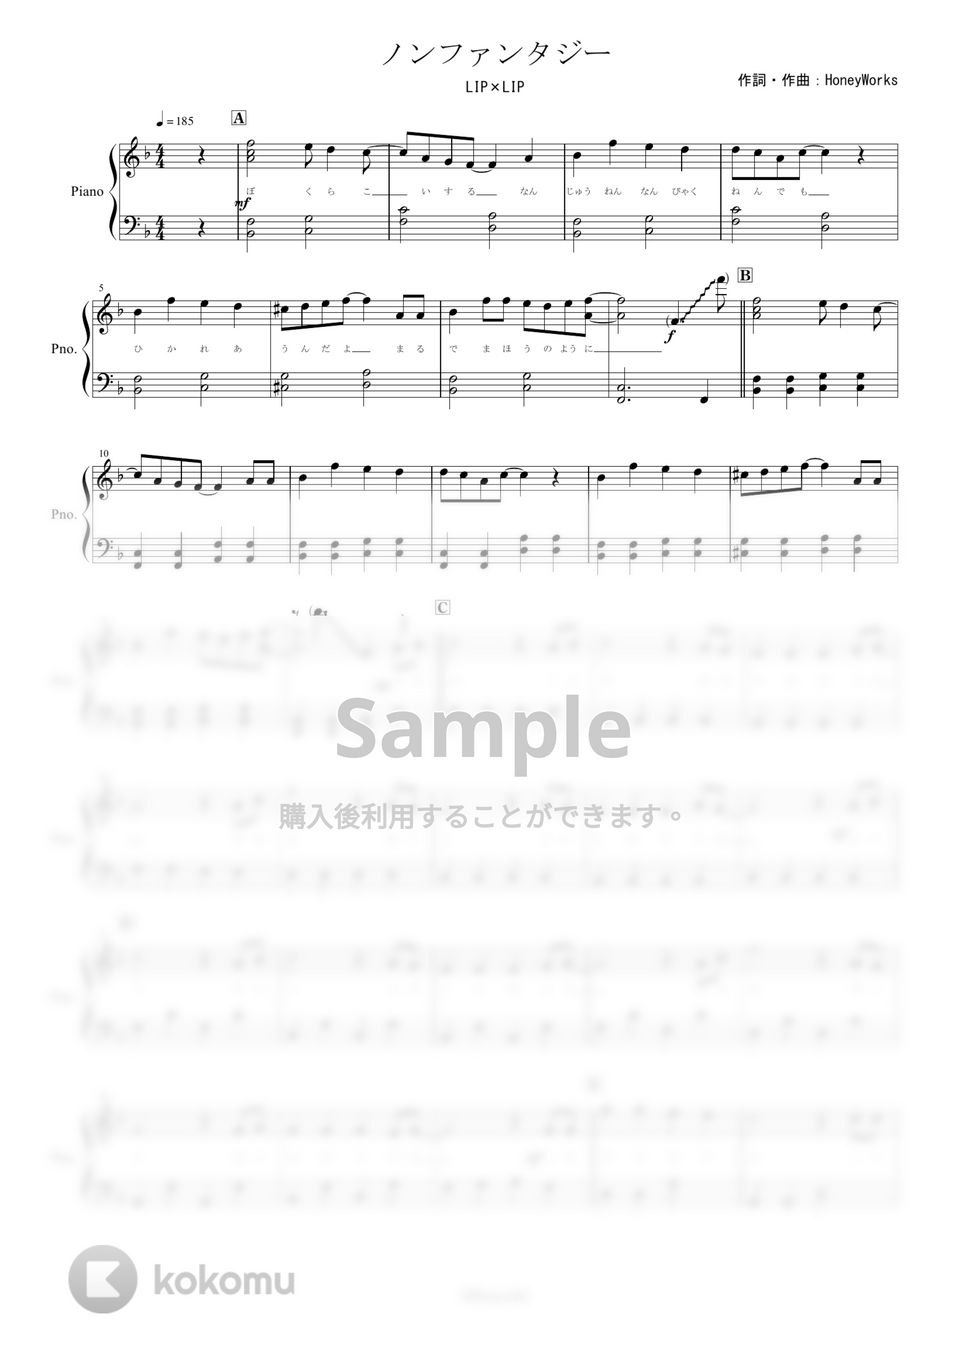 LIP×LIP - ノンファンタジー (ピアノ楽譜 / OPサイズ簡単 / 全２ページ) by yoshi